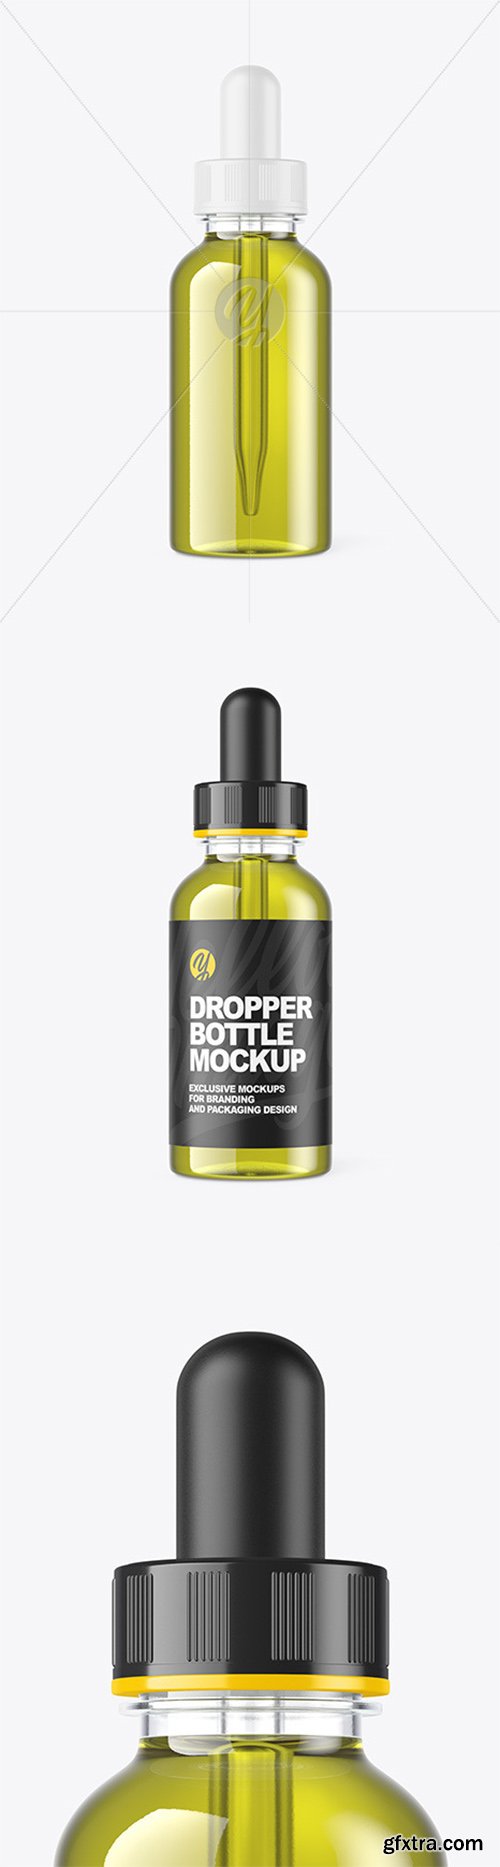 Clear Dropper Bottle with Oil Mockup 55318